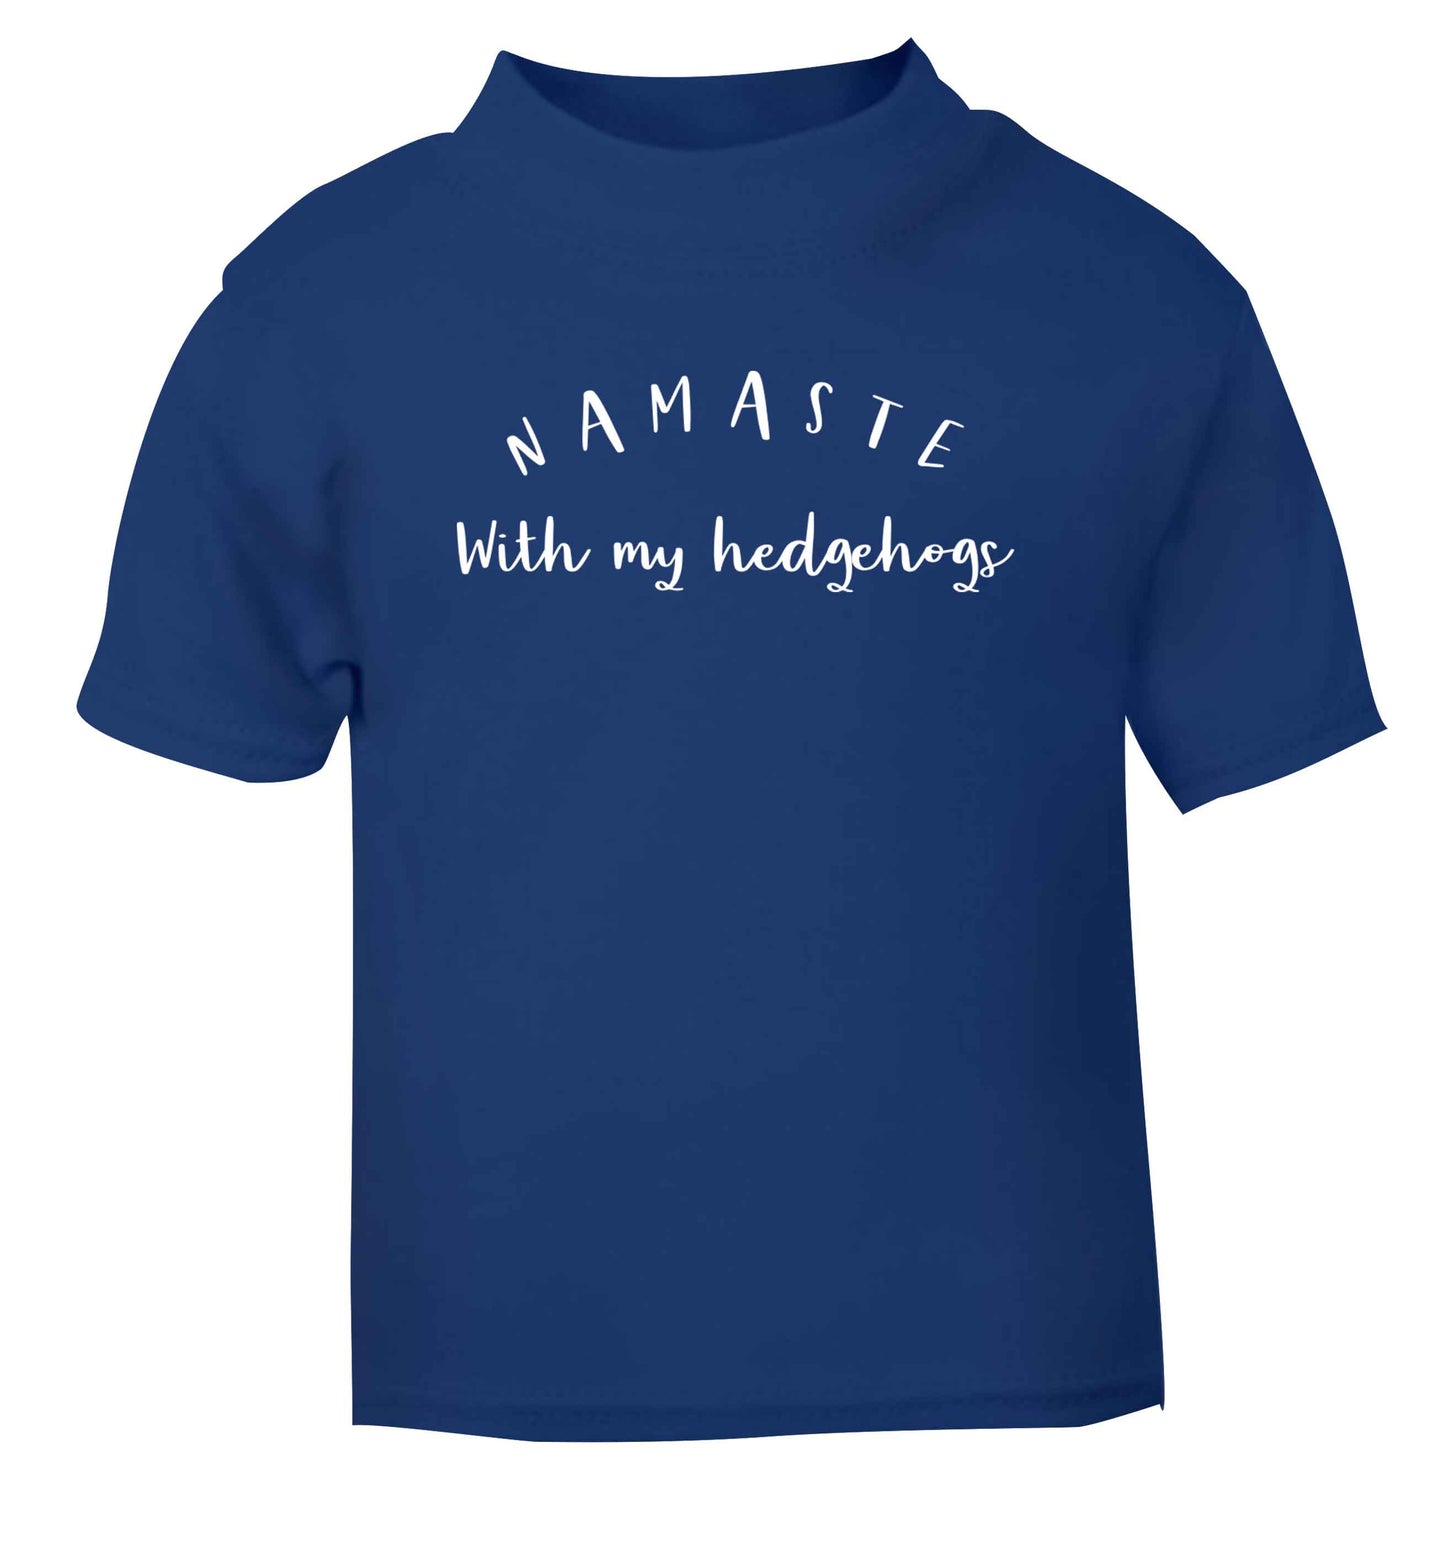 Namaste with my hedgehog blue Baby Toddler Tshirt 2 Years